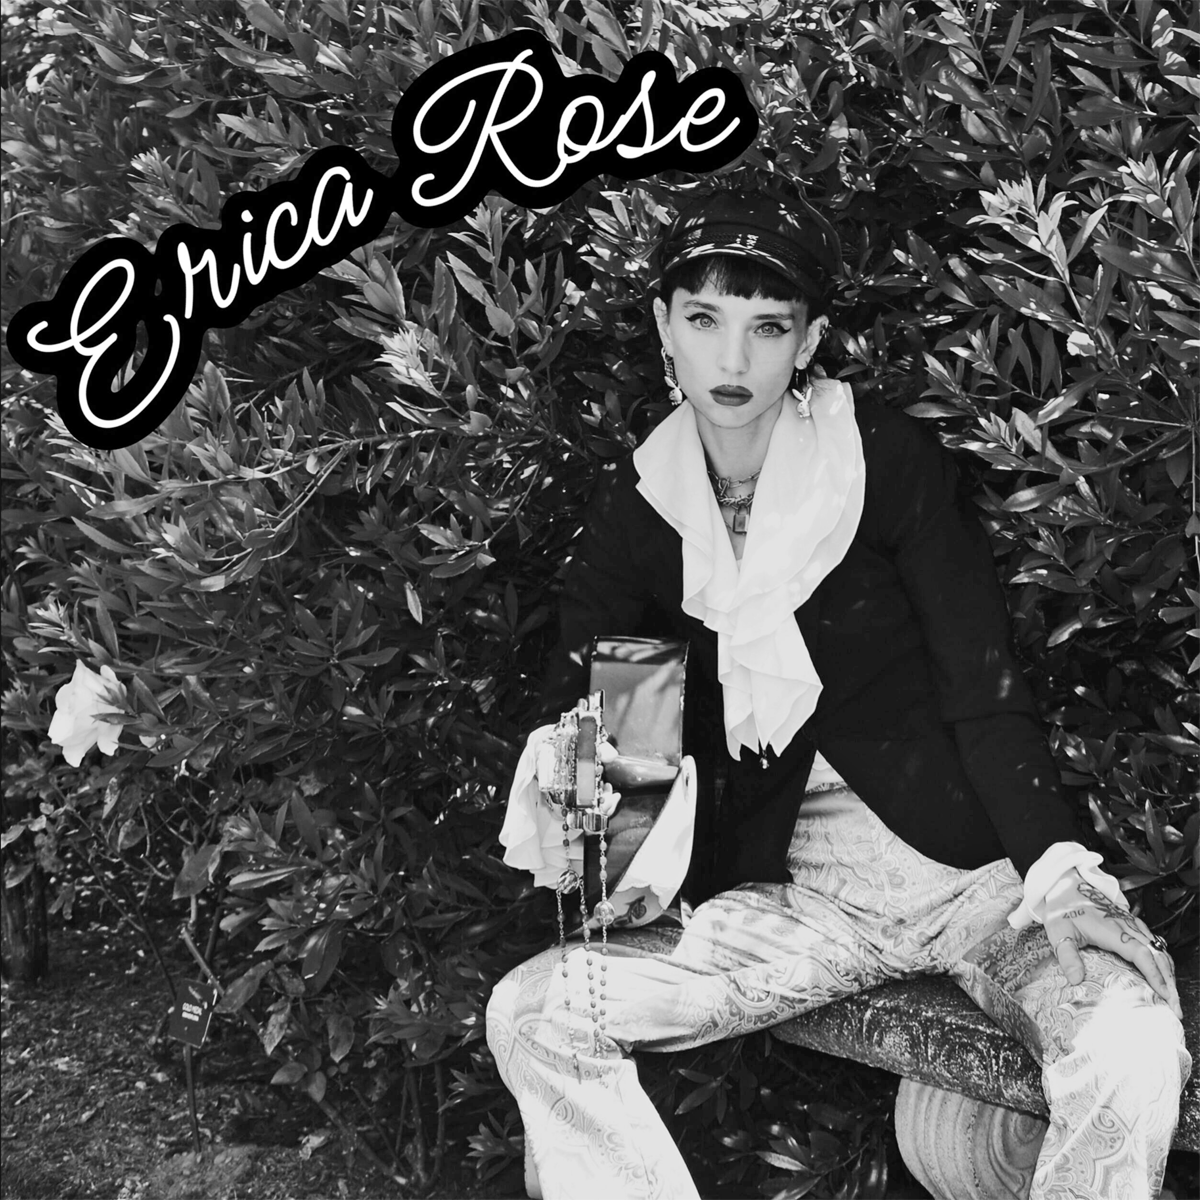 Erica Rose-S/T LP ~EX APPALOOSA!